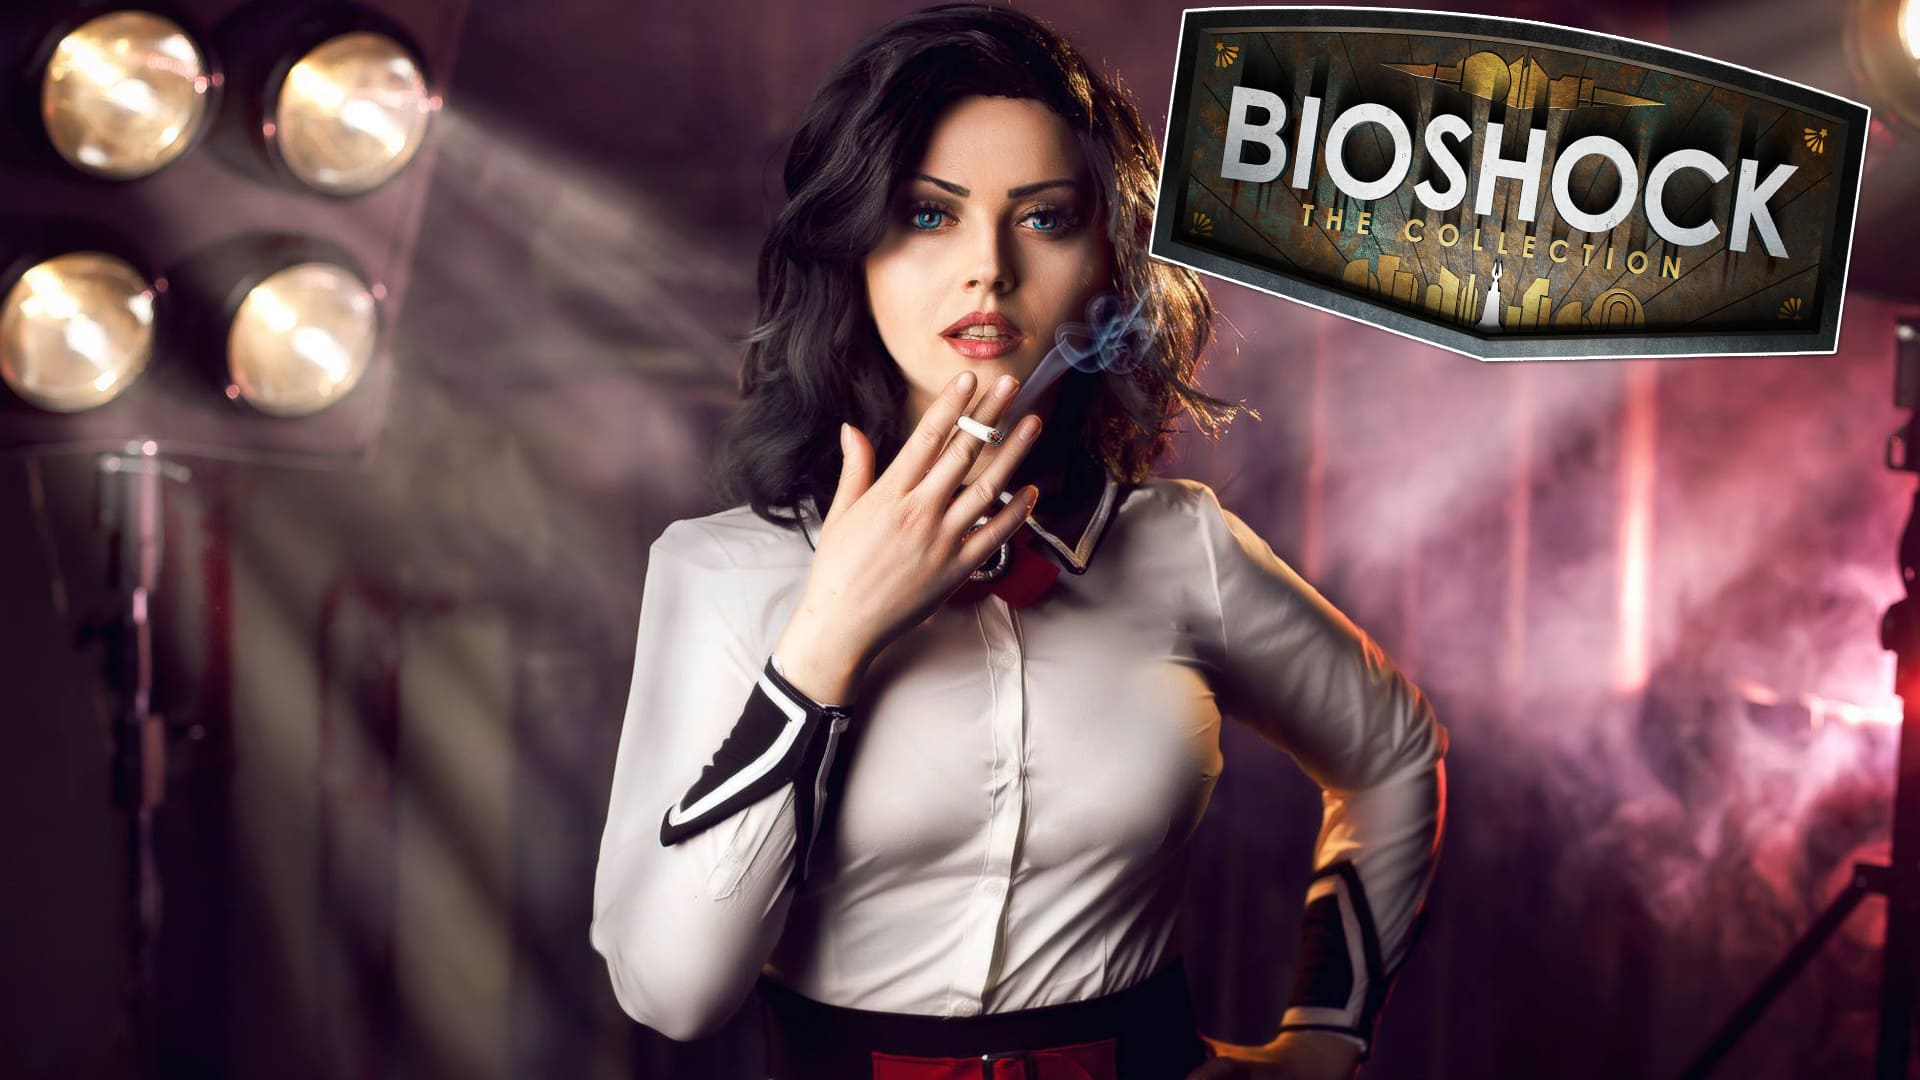 Requisitos mínimos de BioShock Infinite para PC